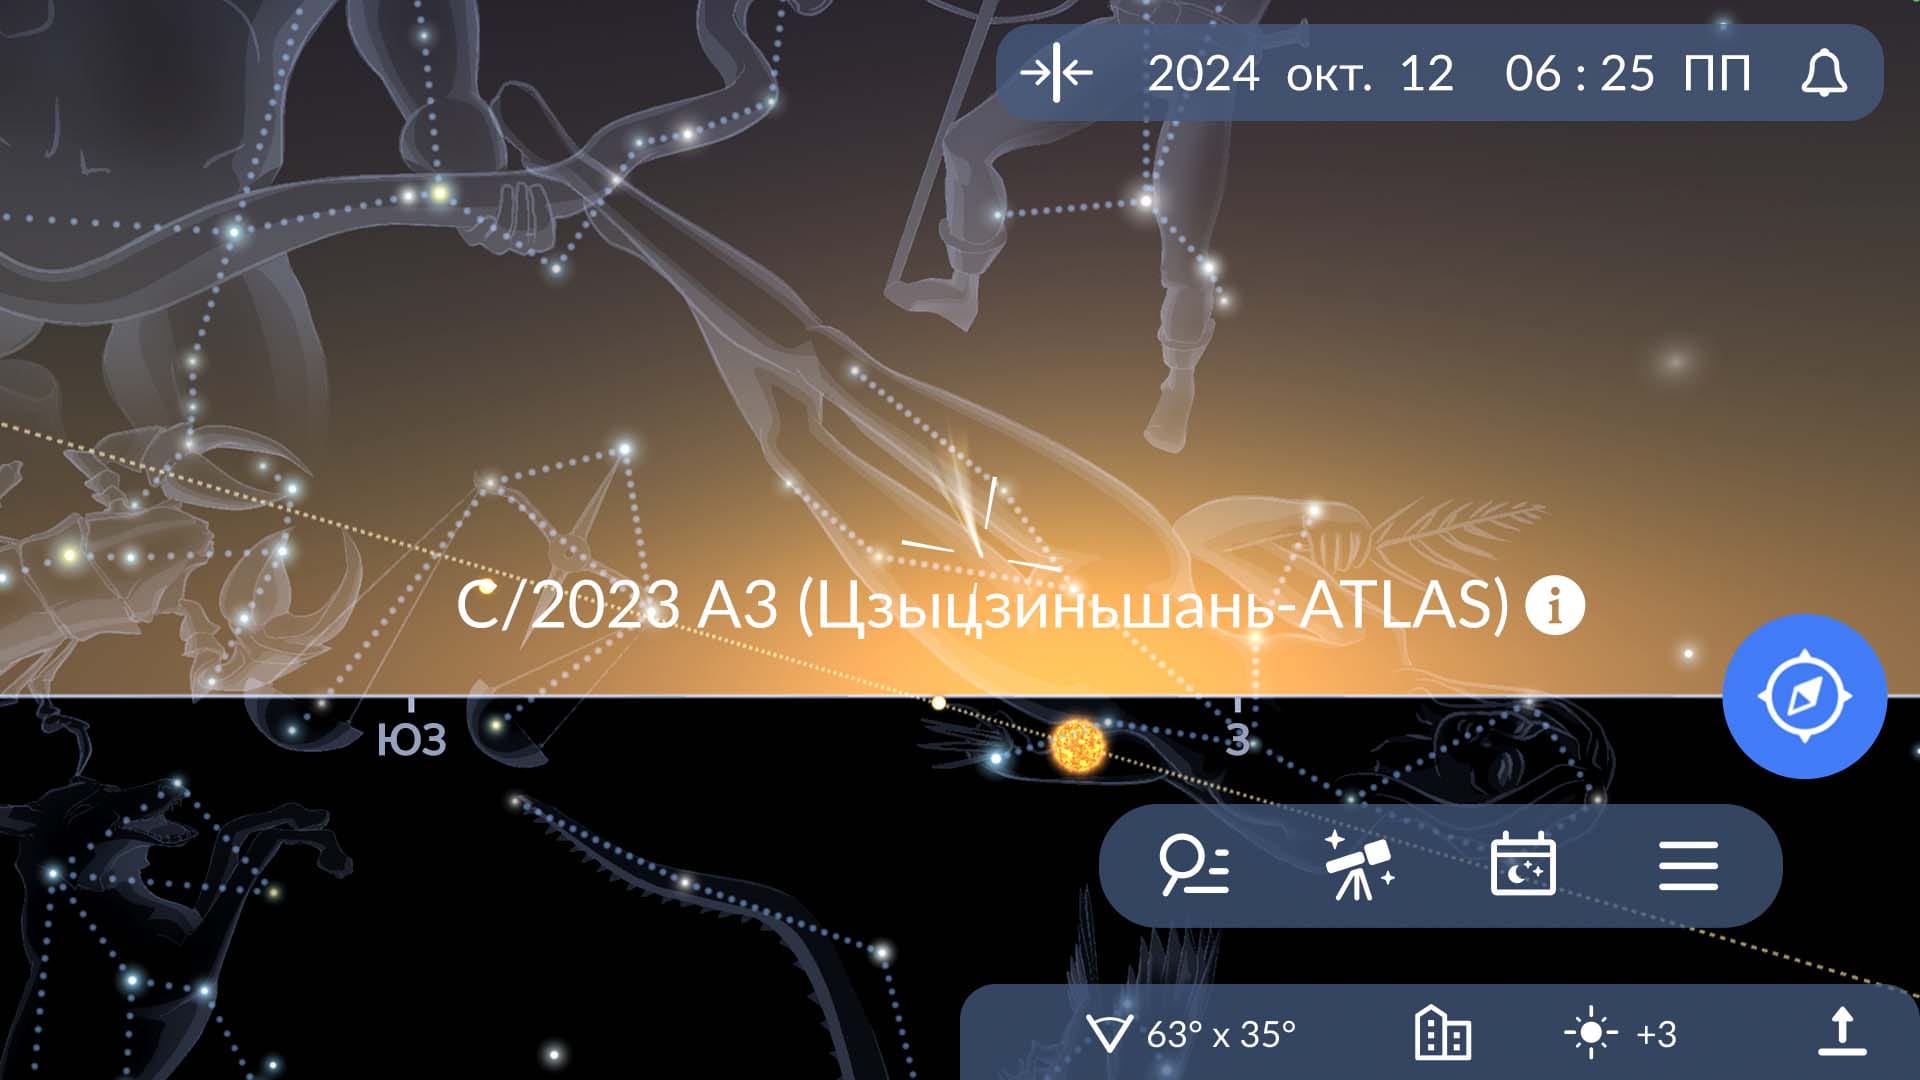 C/2023 A3 (Tsuchinshan-ATLAS) via Sky Tonight app.